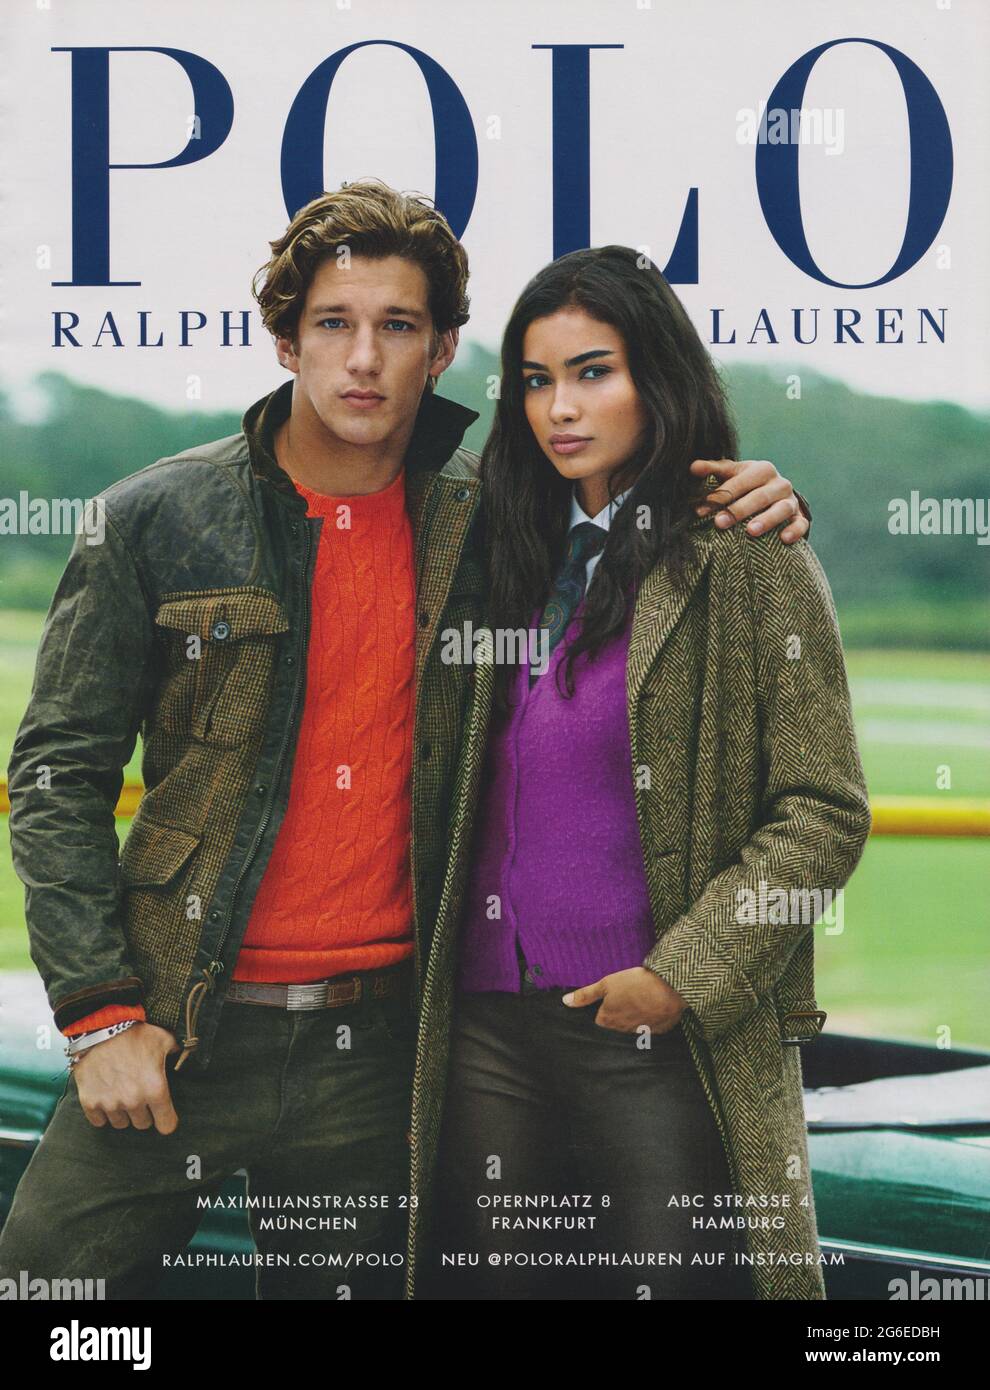 poster advertising Ralph Lauren fashion house in paper magazine from 2015,  advertisement, creative Ralph Lauren 2010s advert Stock Photo - Alamy